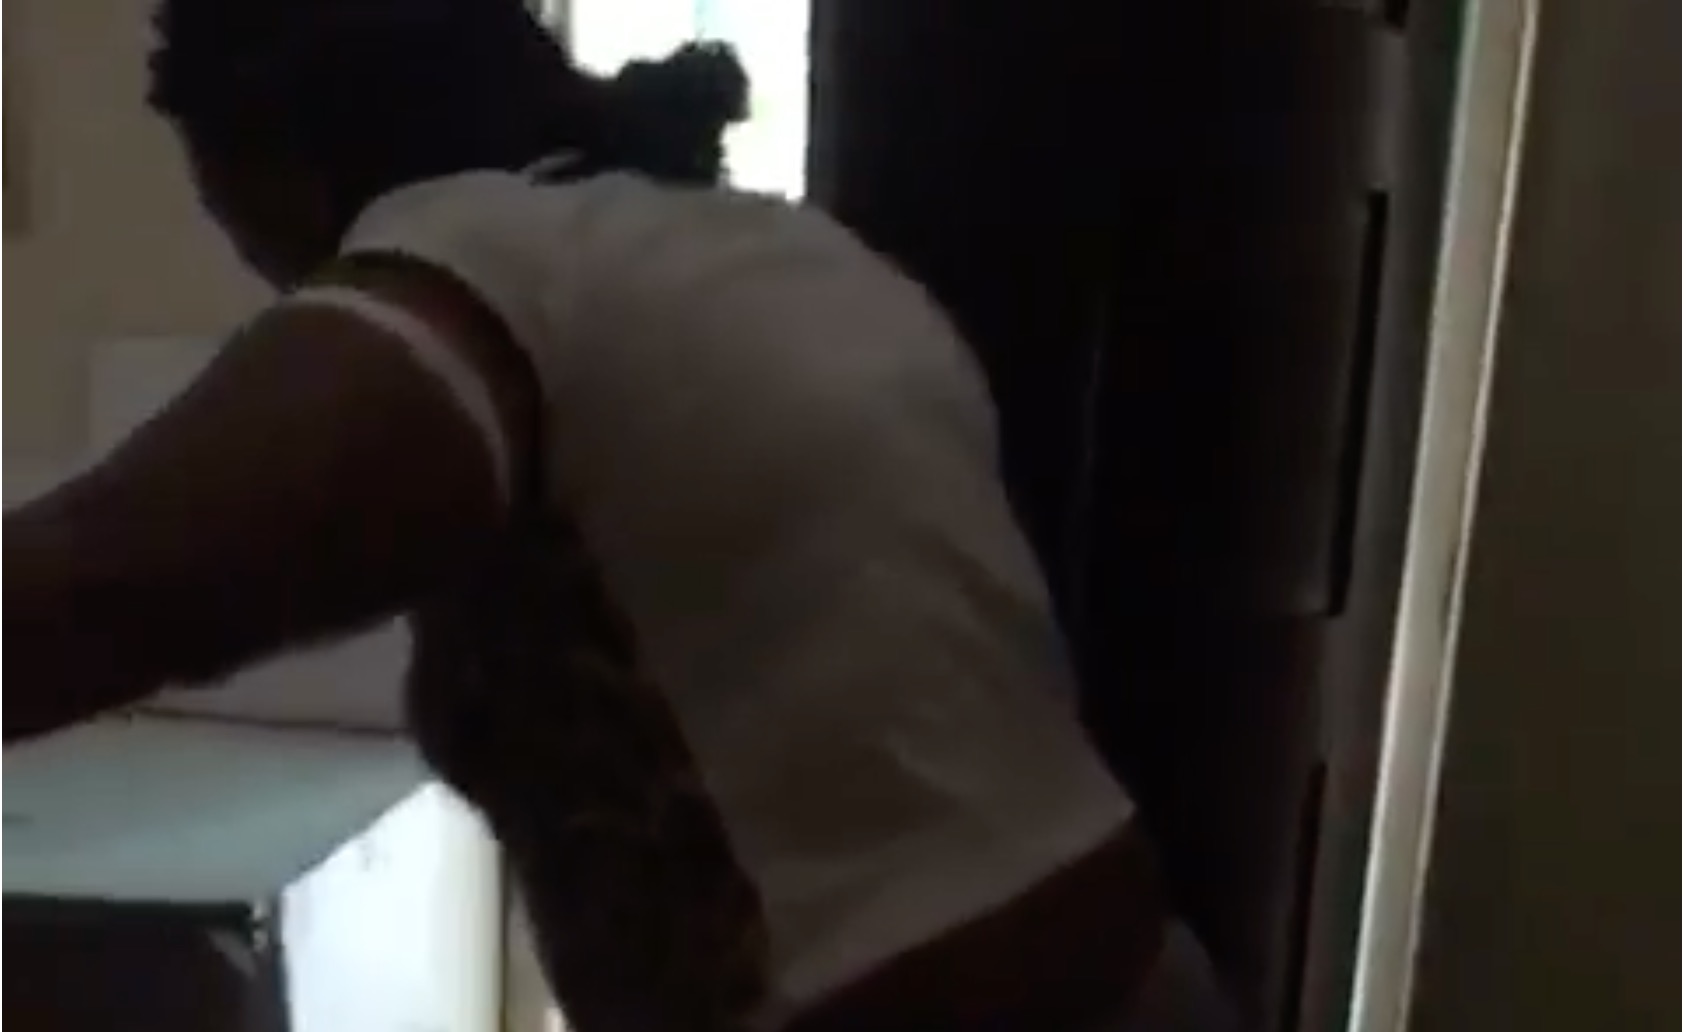 WATCH: Woman Violently Beats Teen In Viral Video